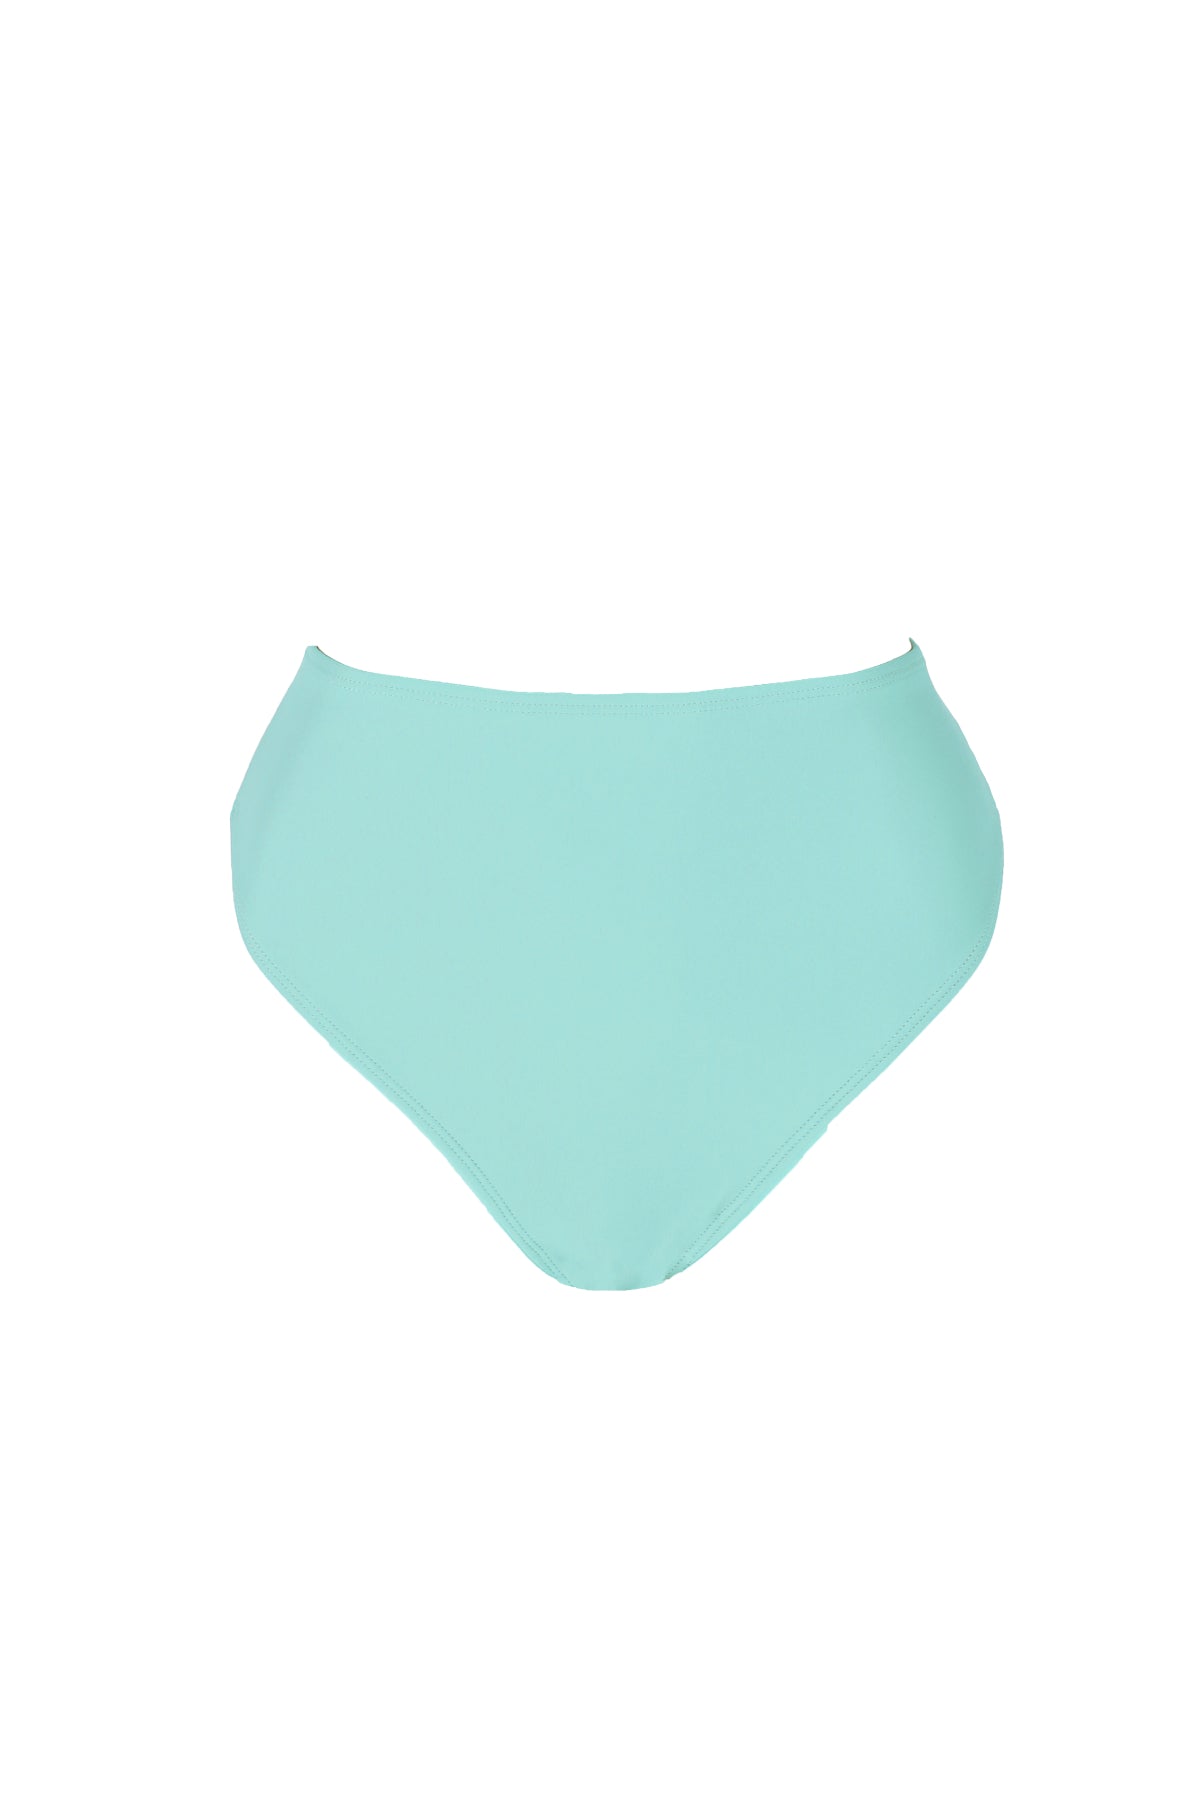 Annie in Aqua Blue High waist bikini bottoms from sustainable brand Koraru